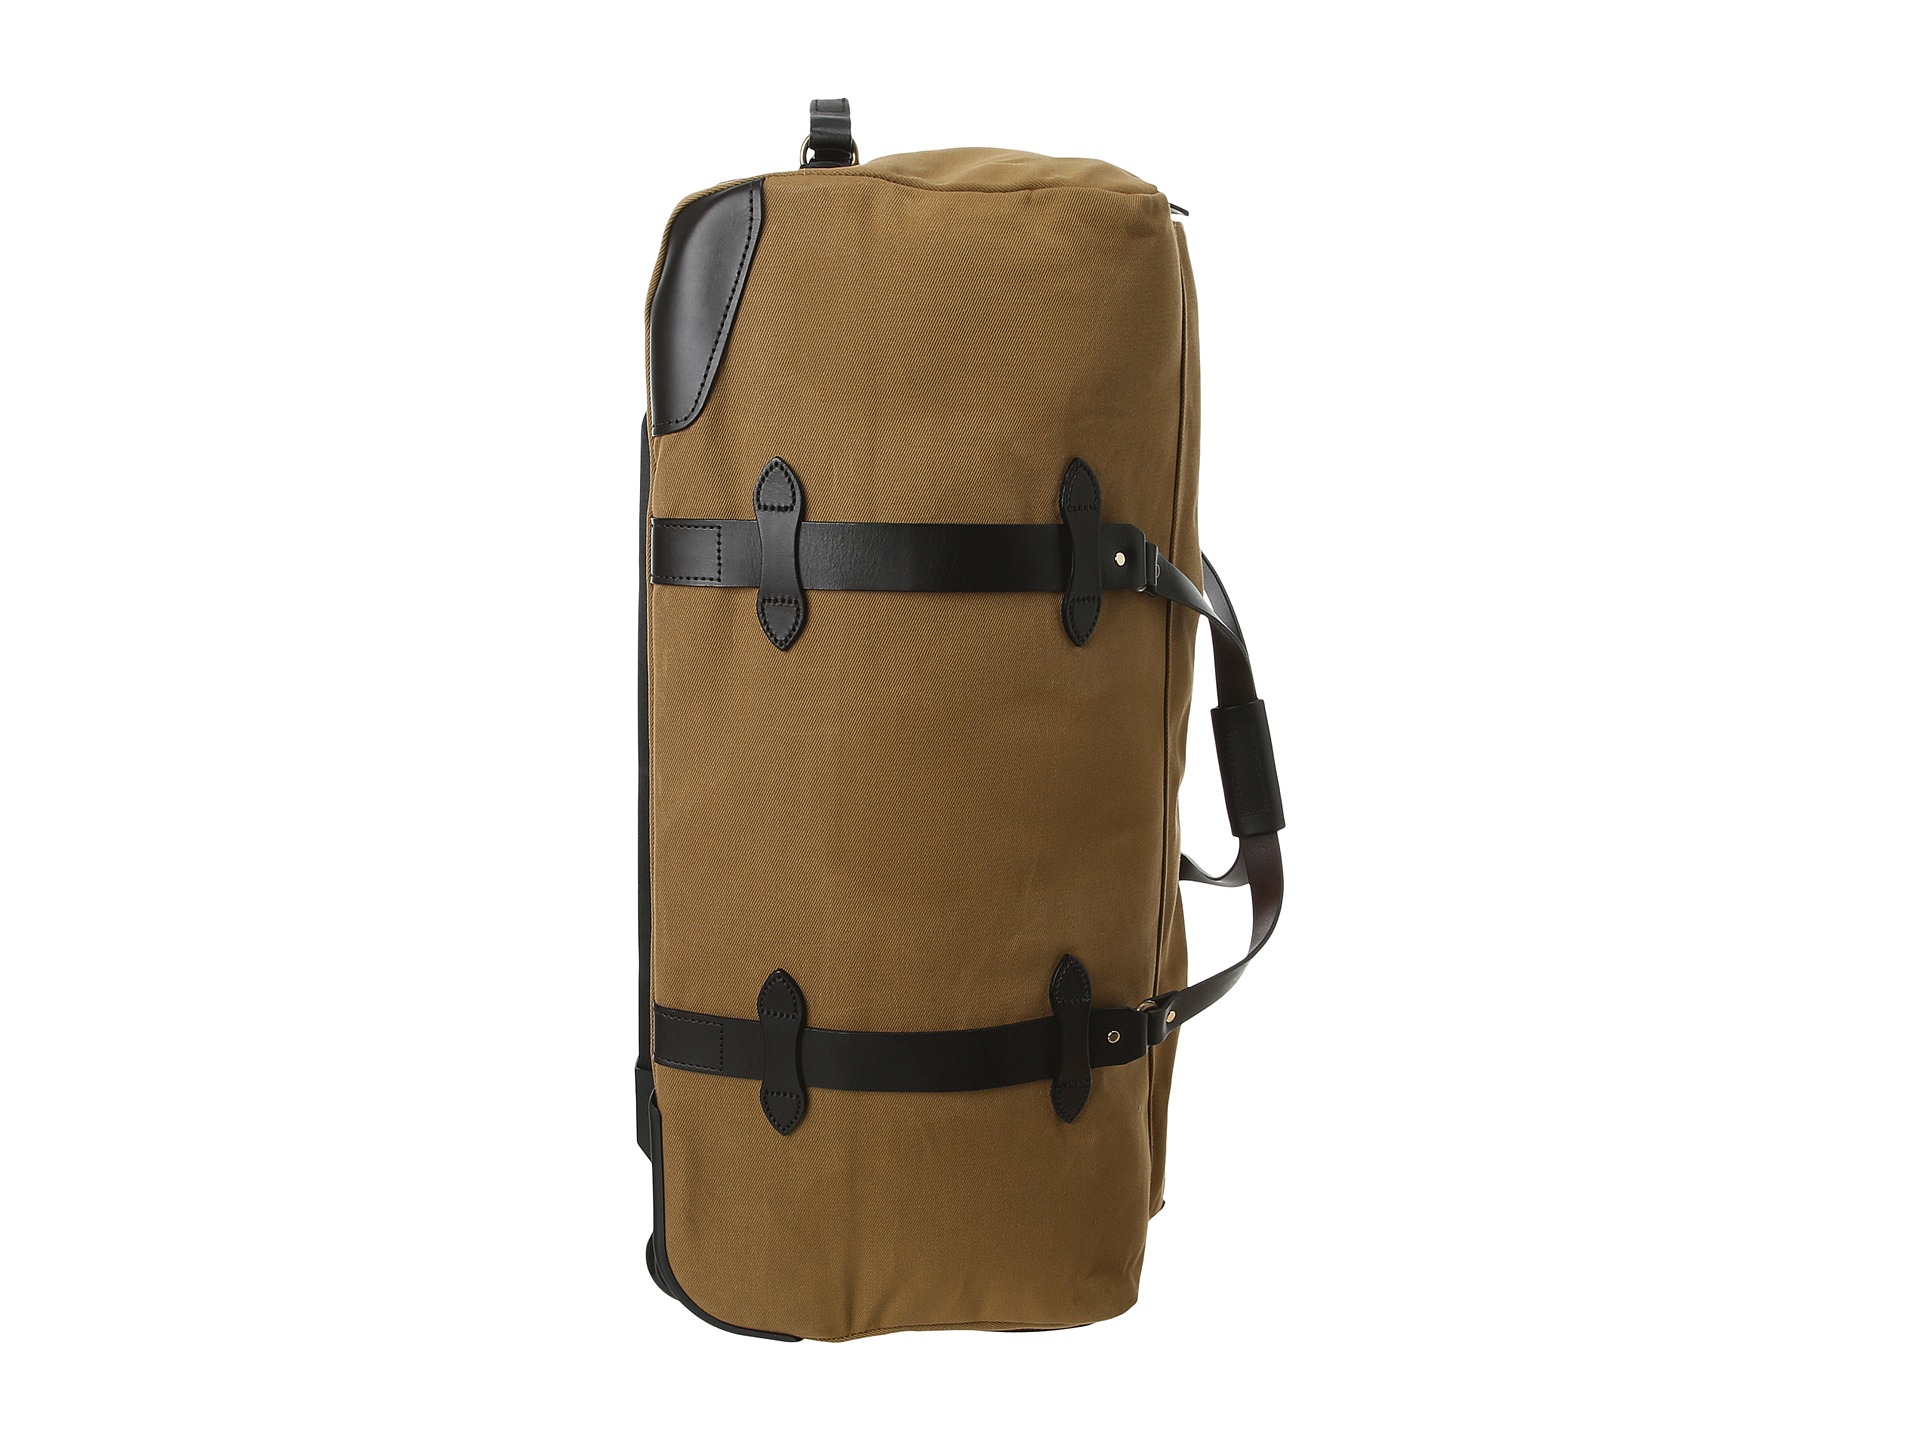 Filson Large Wheeled Duffle Bag | Shipped Free at Zappos